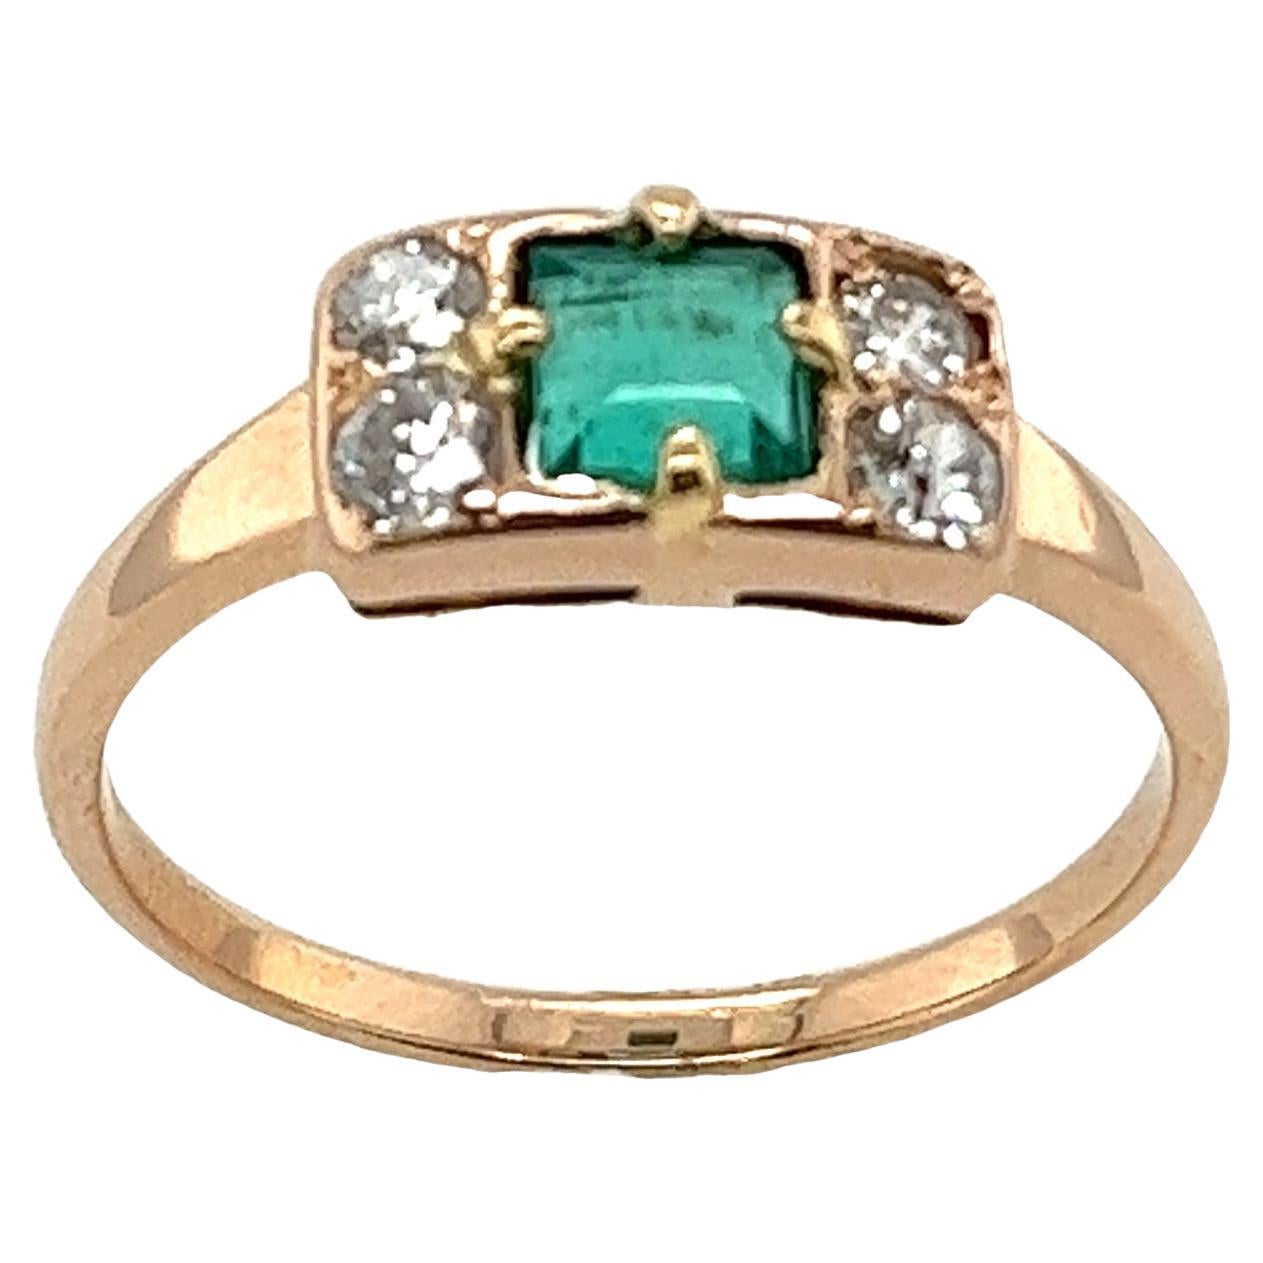 18ct Rose Gold Emerald & Diamond Ring Set With 4 Round Diamonds 0.30ct